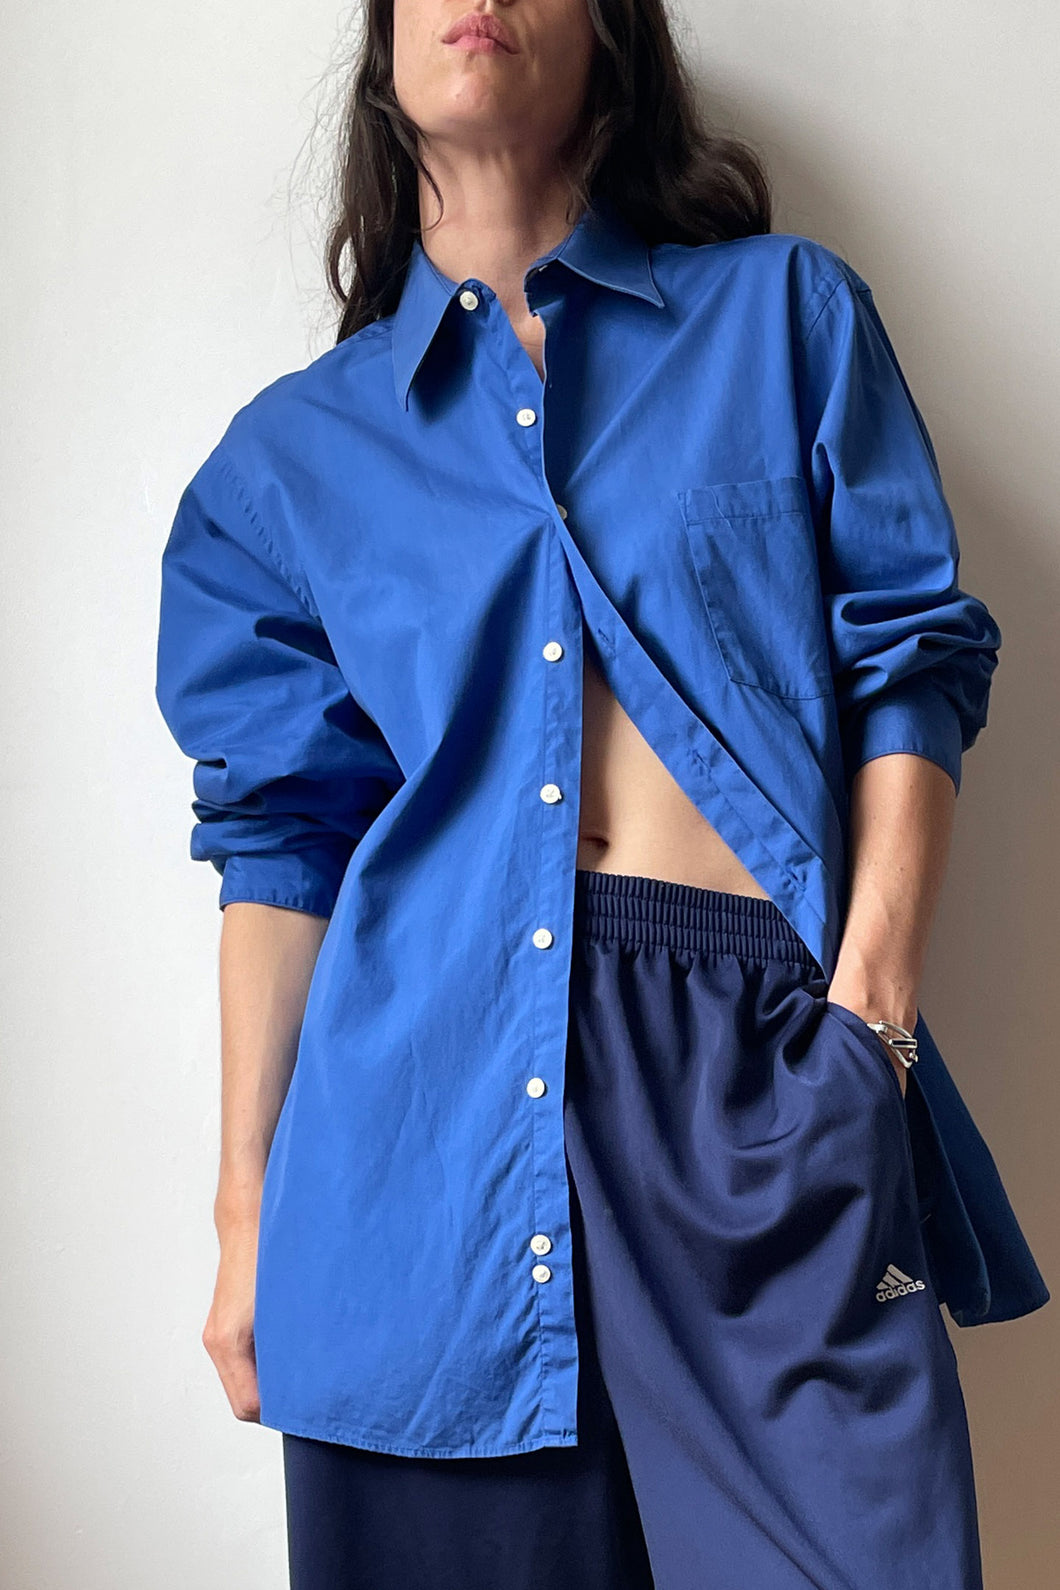 Klein Blue DKNY Shirt - L